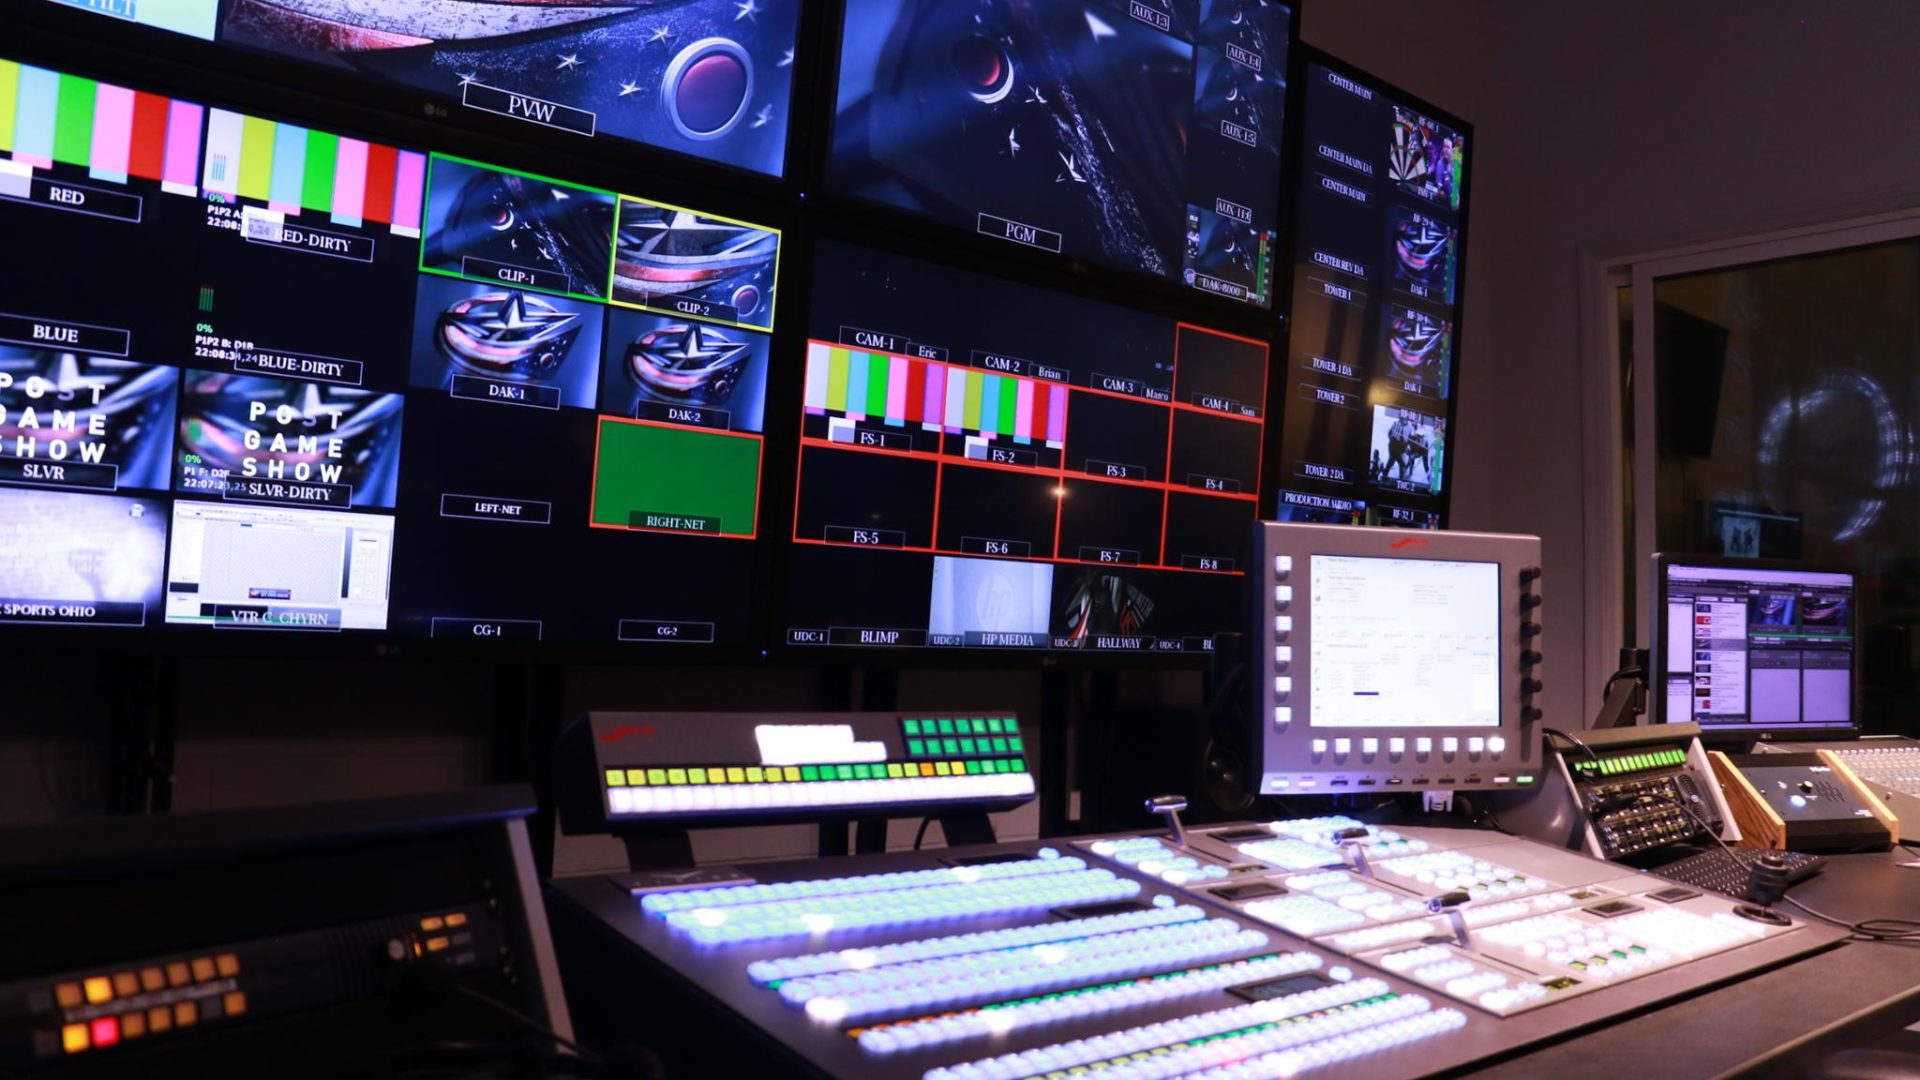 AV, Audio Visual, Video Replay Control Room, Broadcast